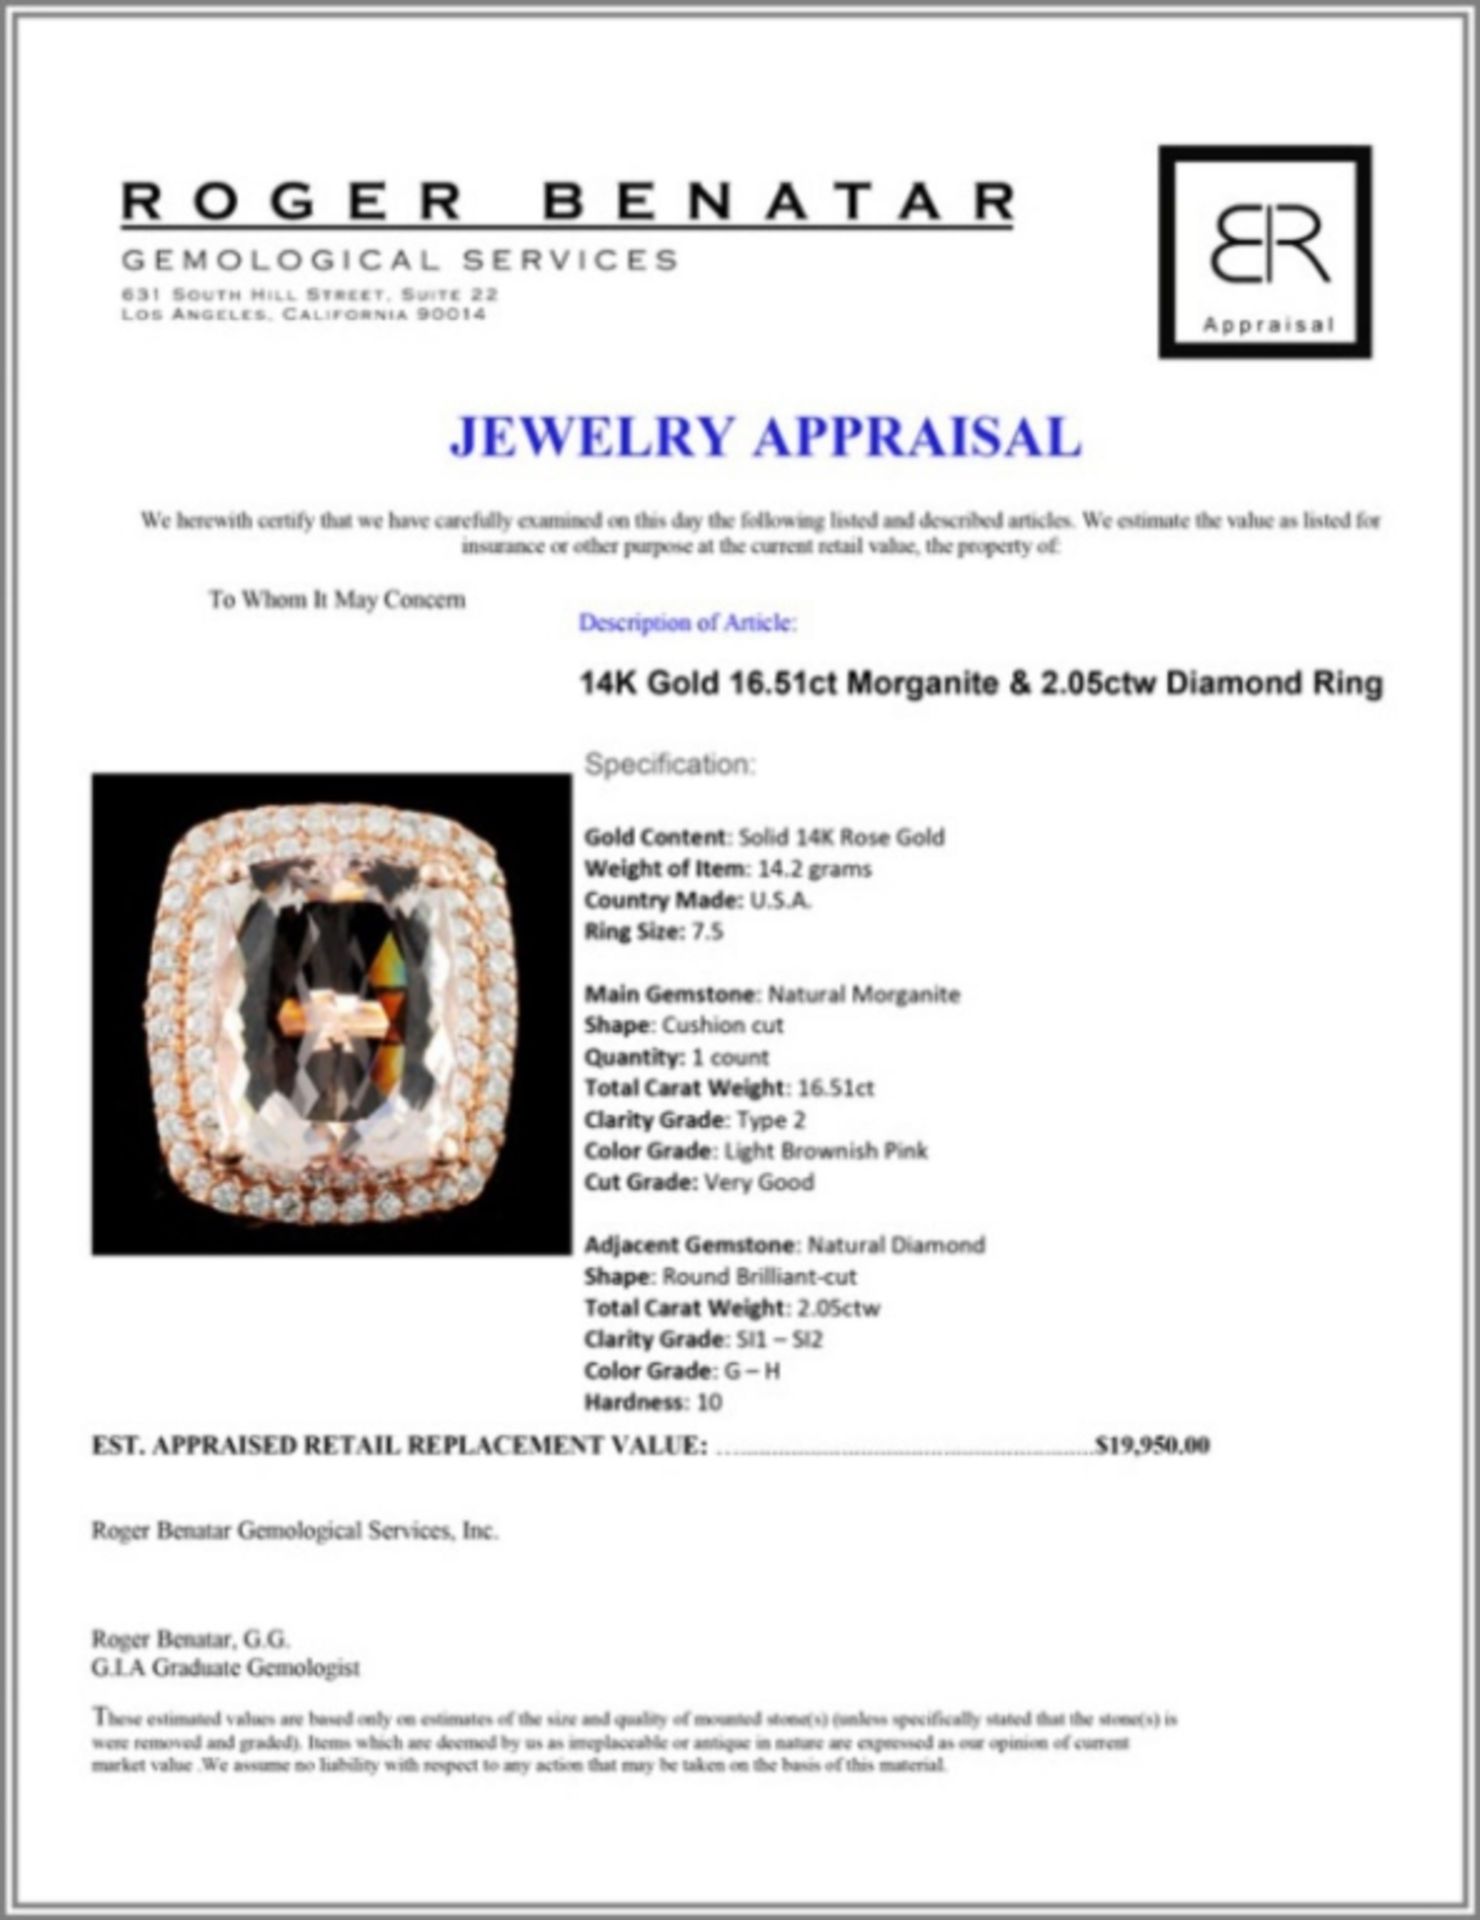 14K Gold 16.51ct Morganite & 2.05ctw Diamond Ring - Image 4 of 4